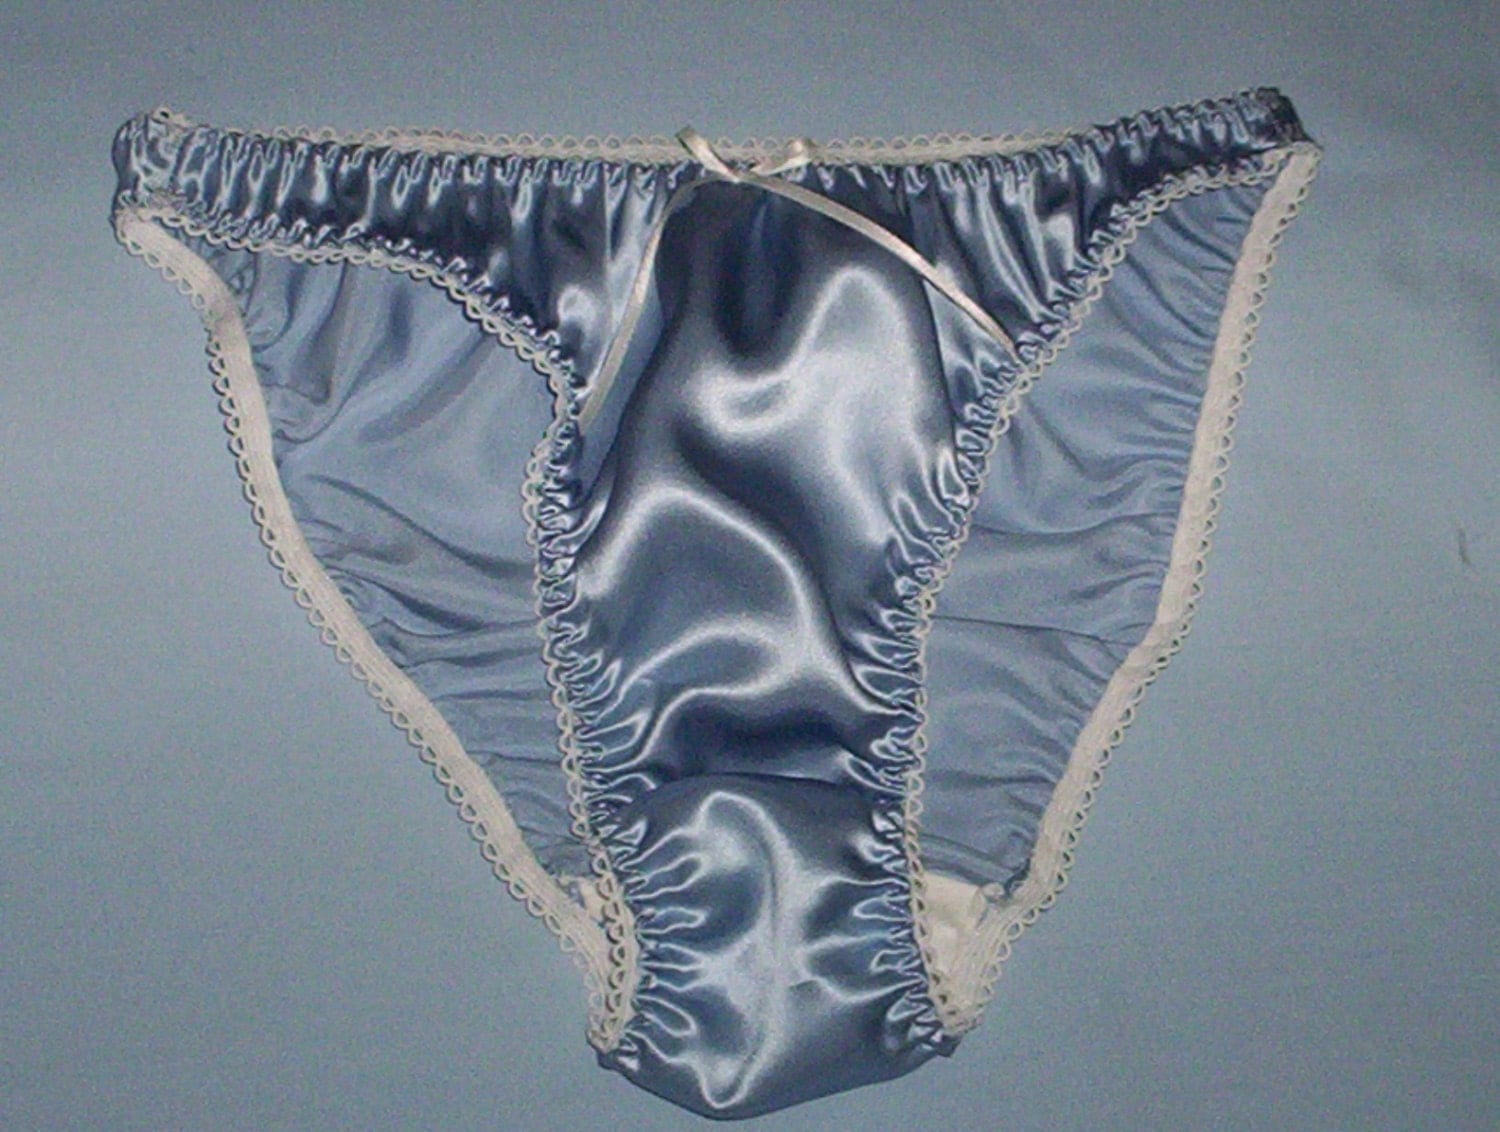 Blue Silk Panties 110